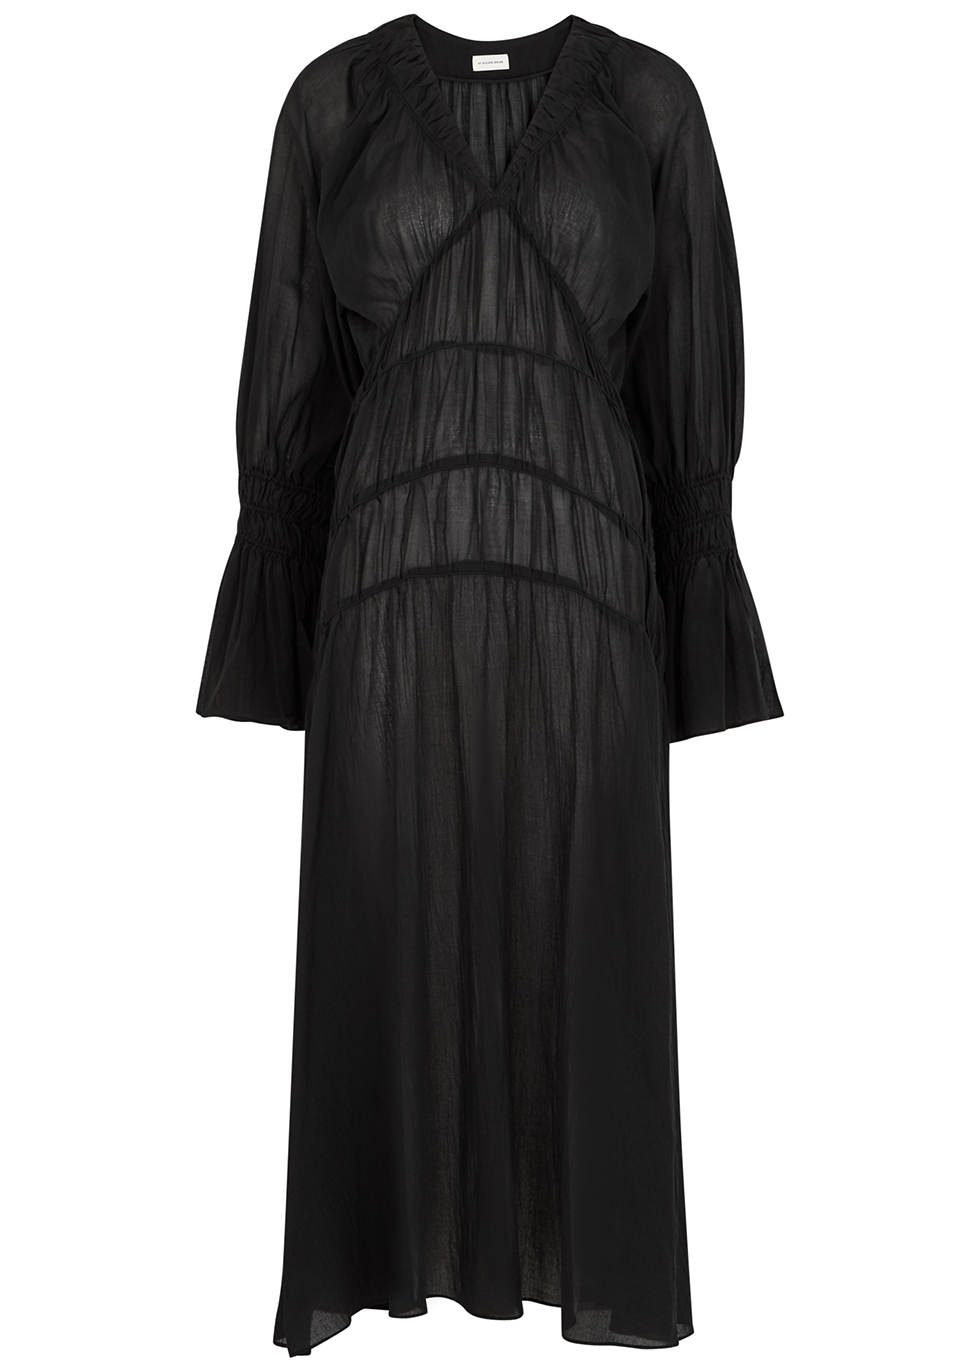 BY MALENE BIRGER Ahyenna black cotton maxi dress